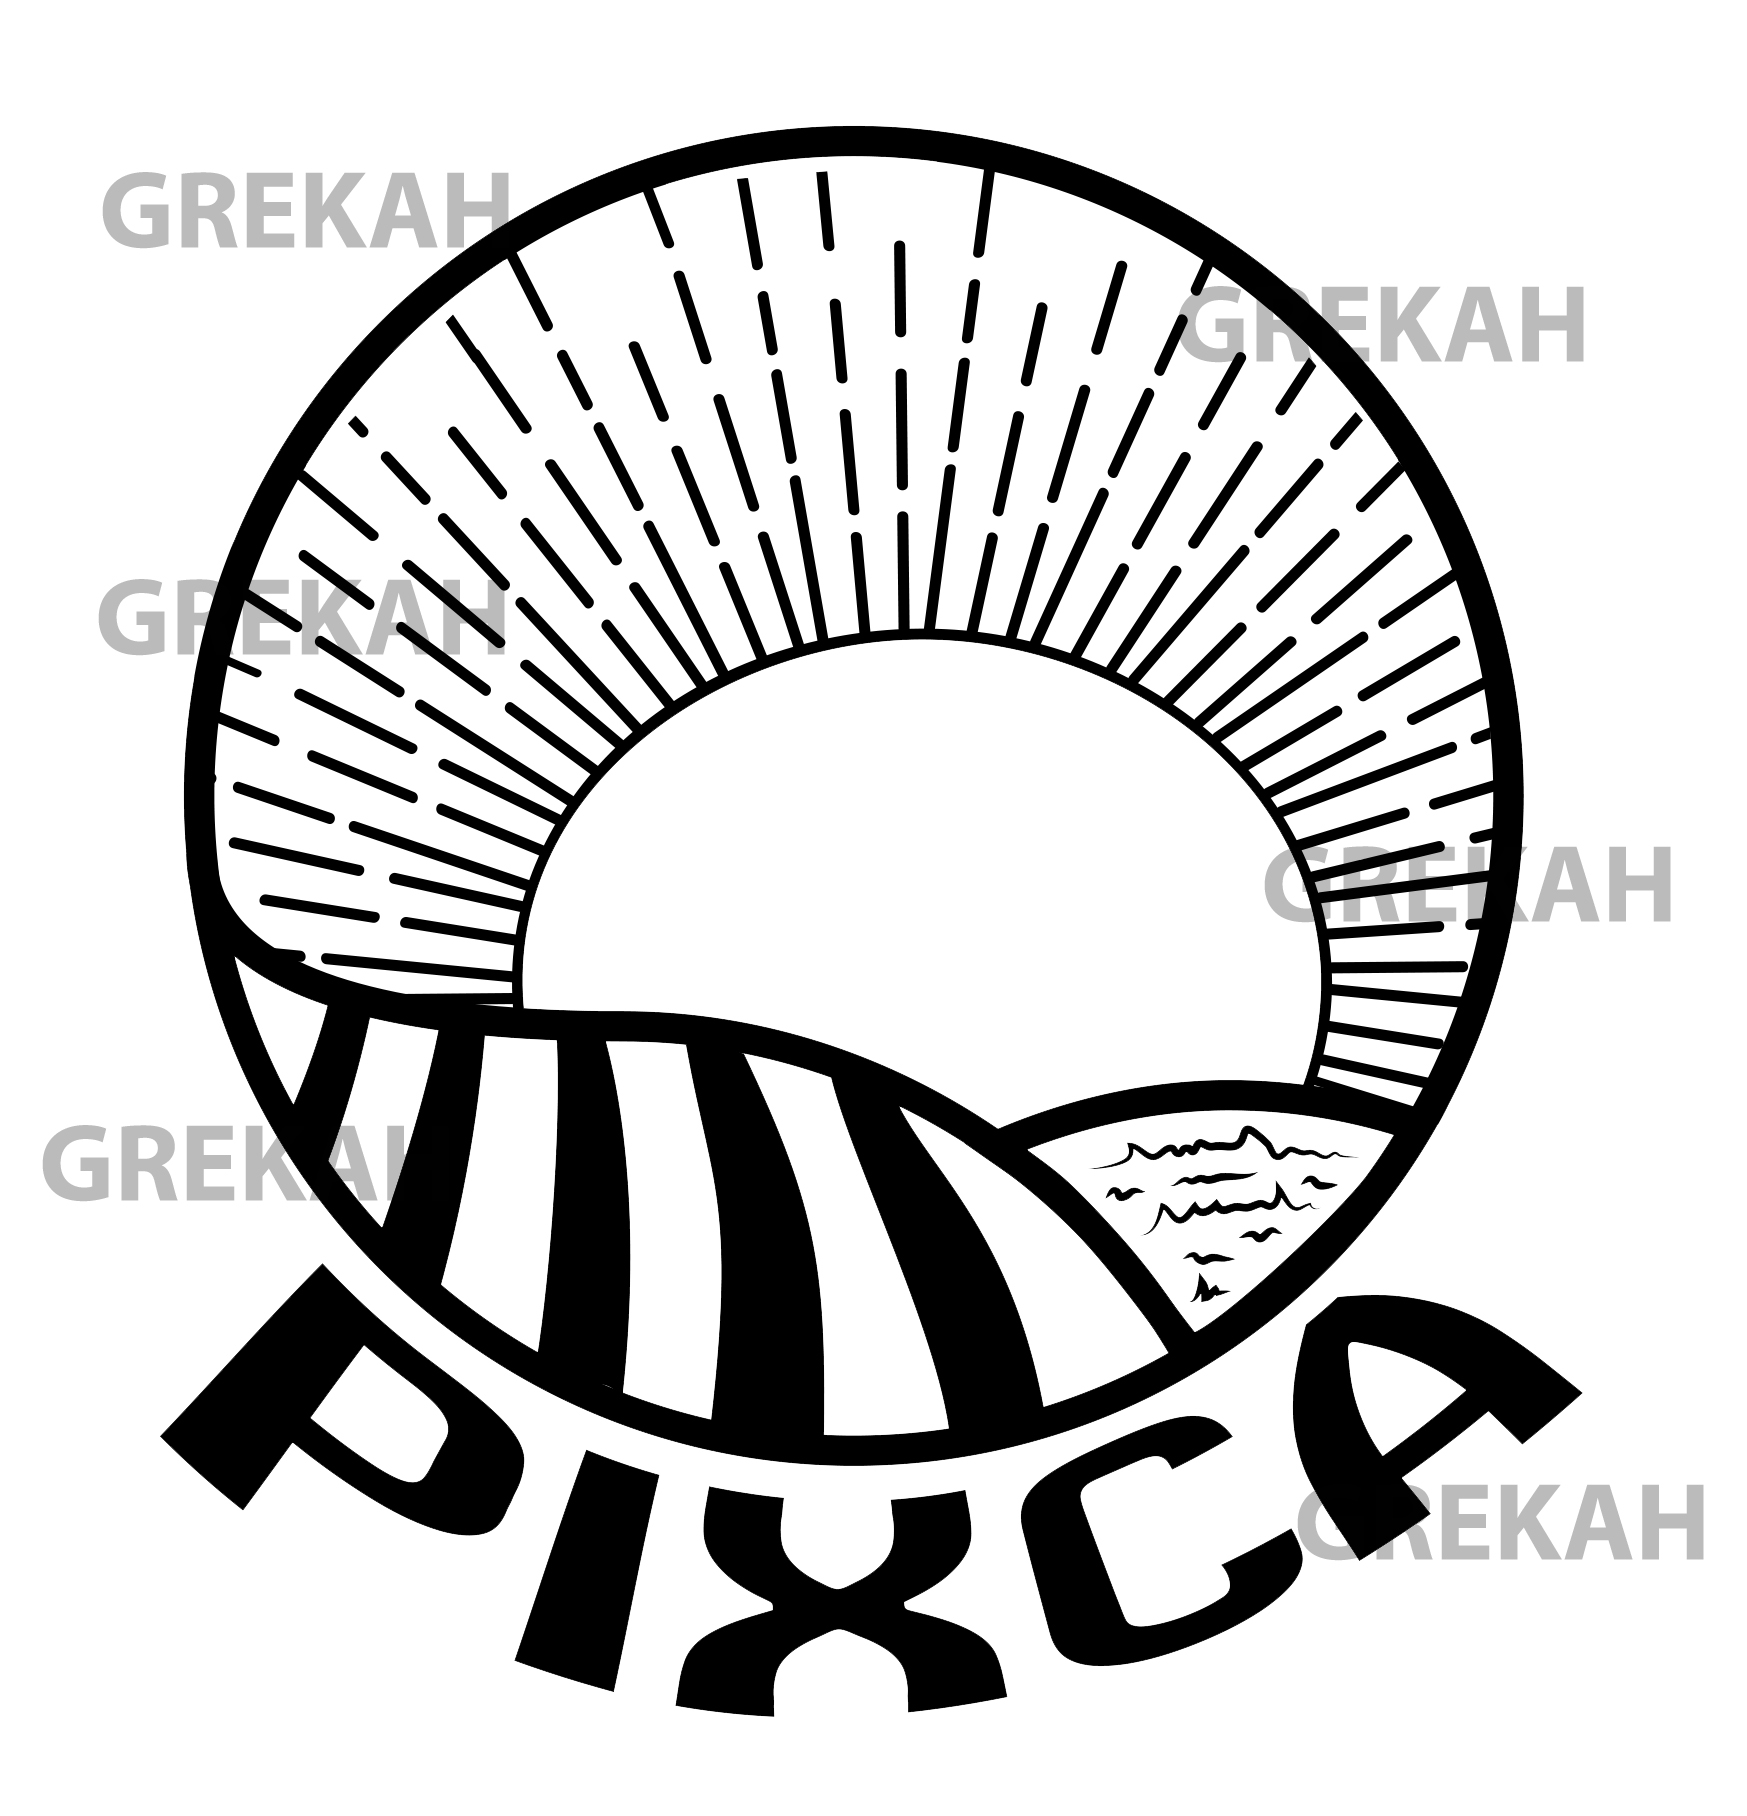 PIXCA_LOGO-grekahicon